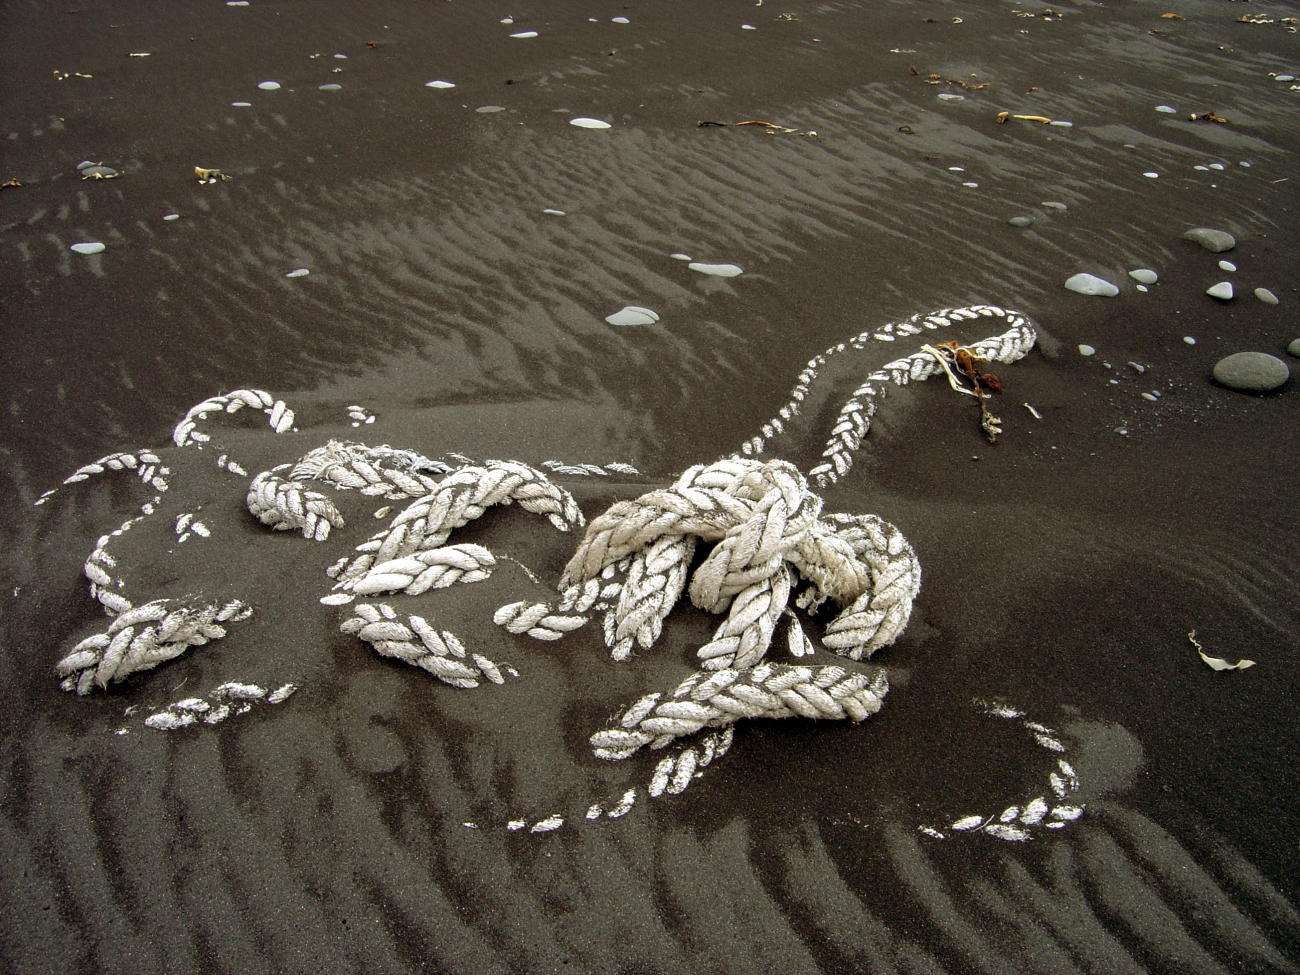 Marine debris on a black volcanic sand beach